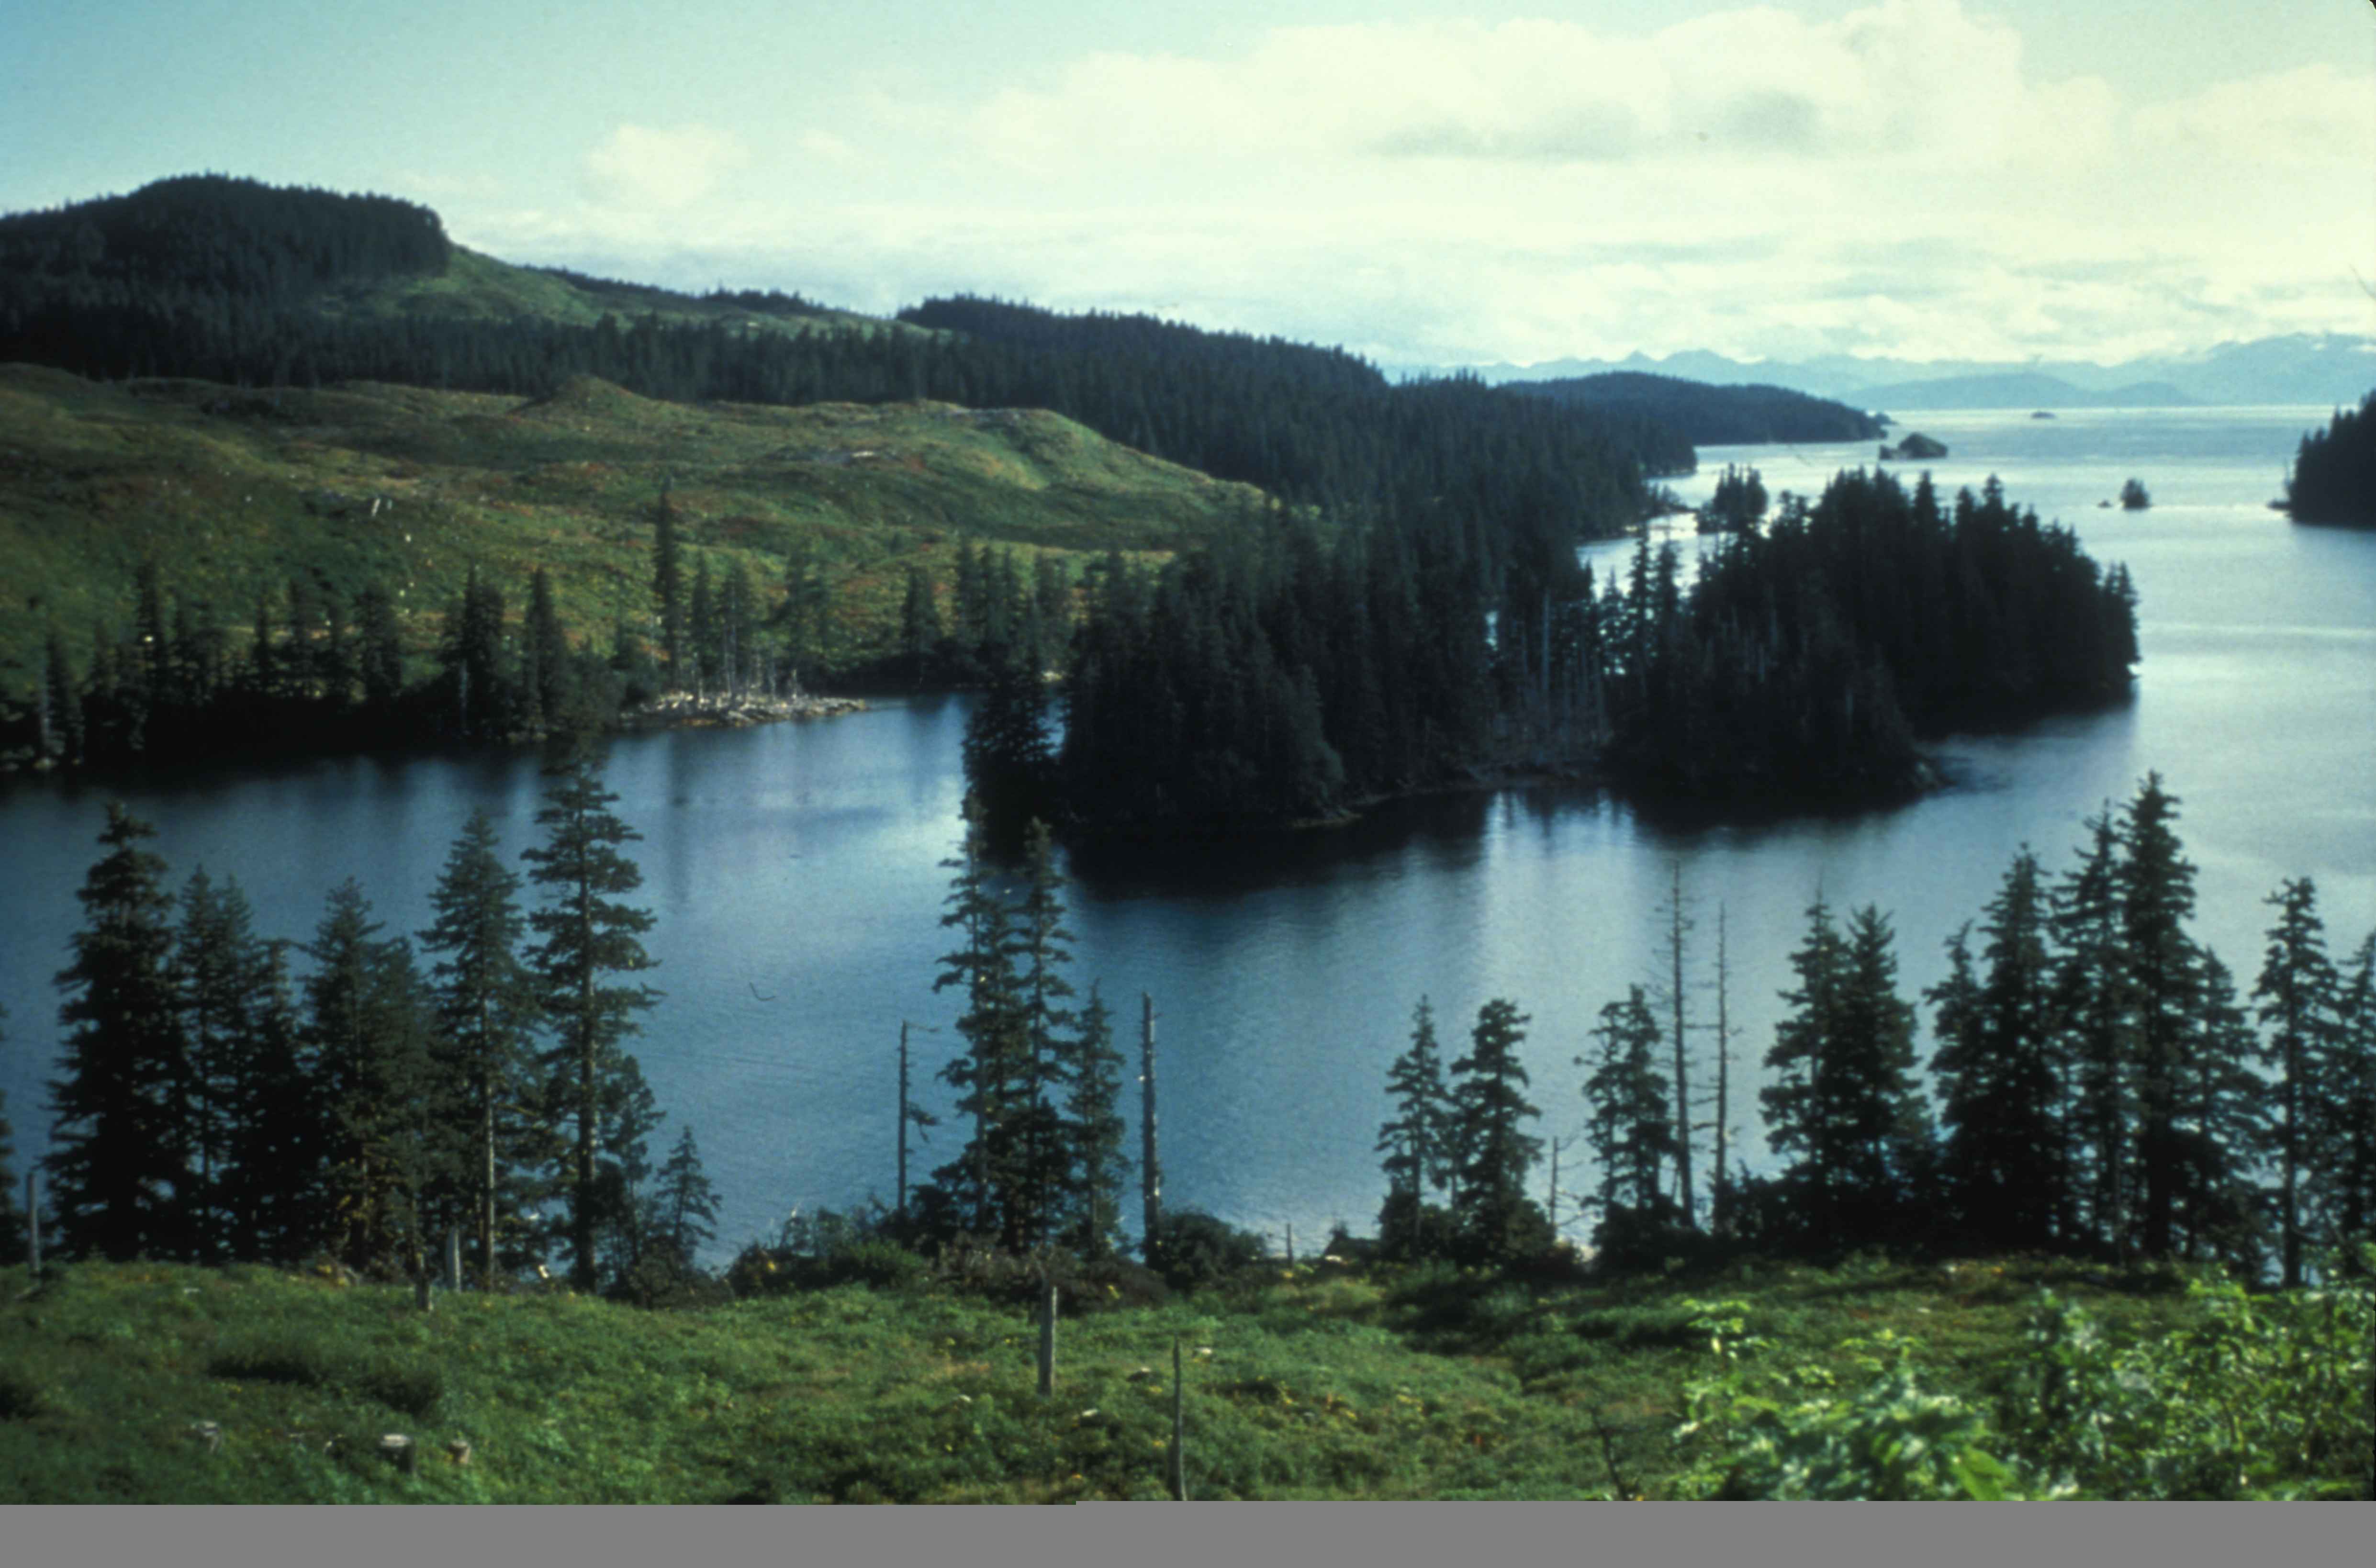 File:Scenic view of lagoon.jpg - Wikimedia Commons